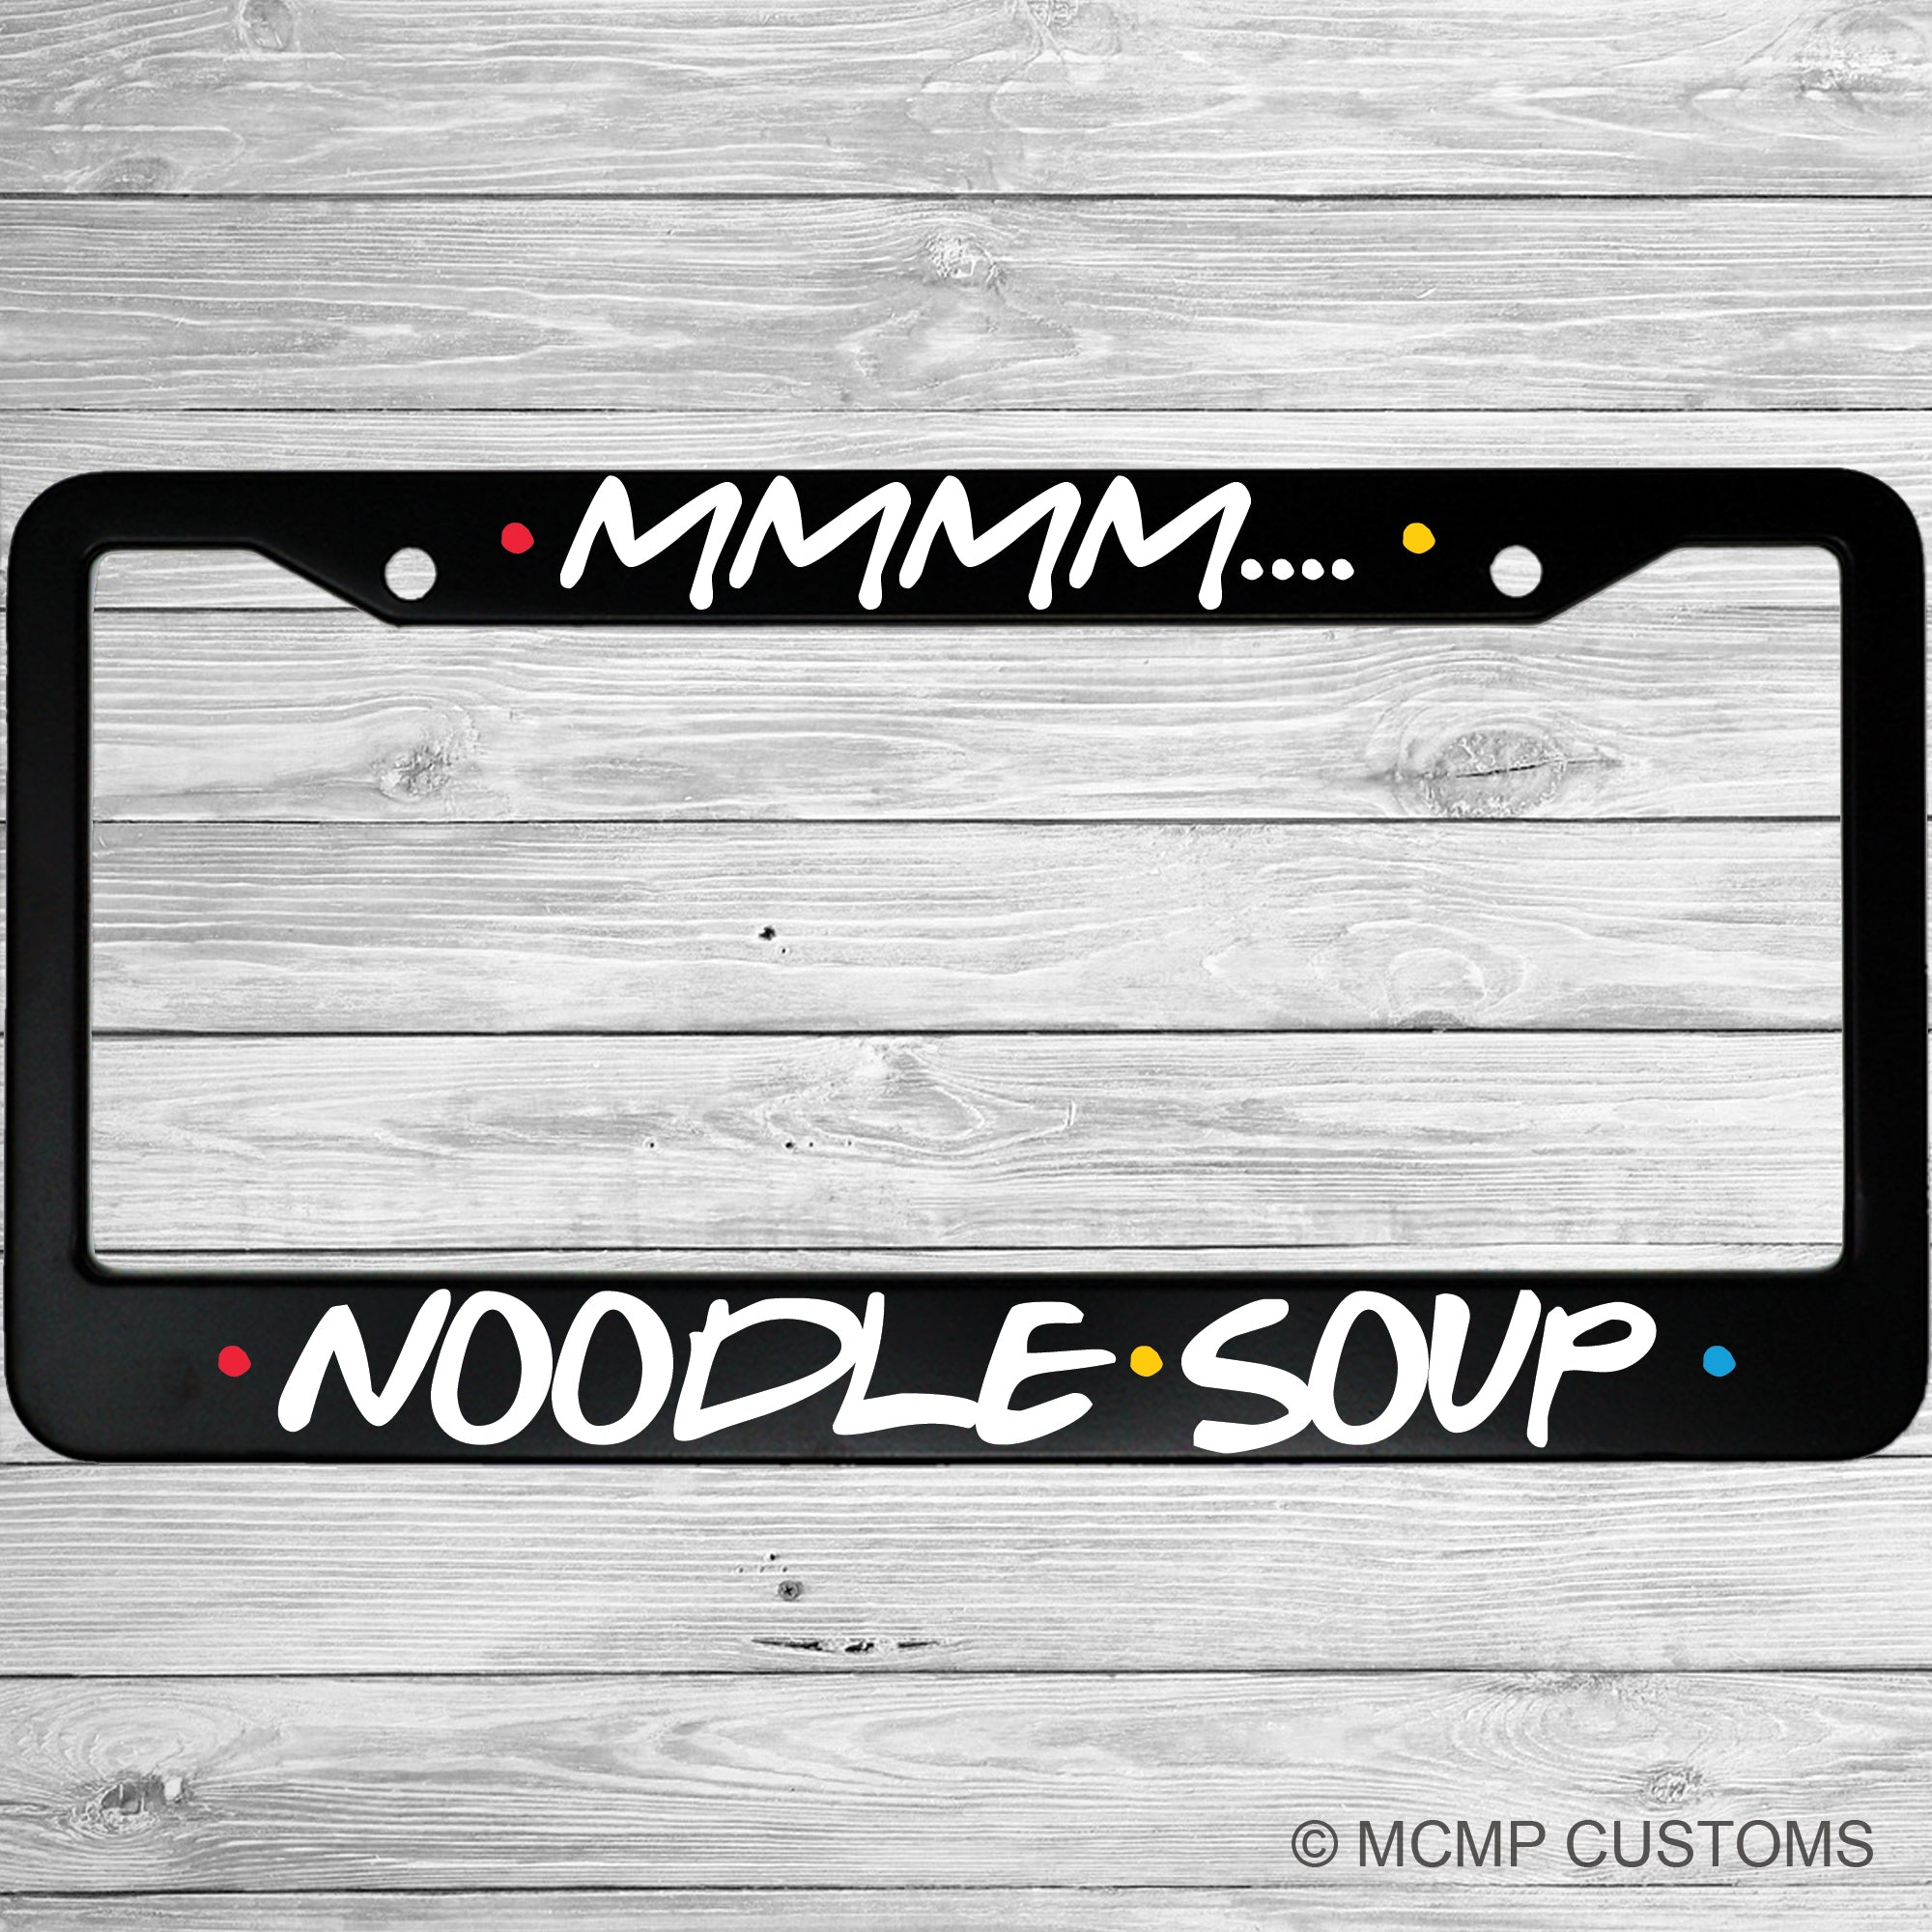 Mmmm.... Noodle Soup